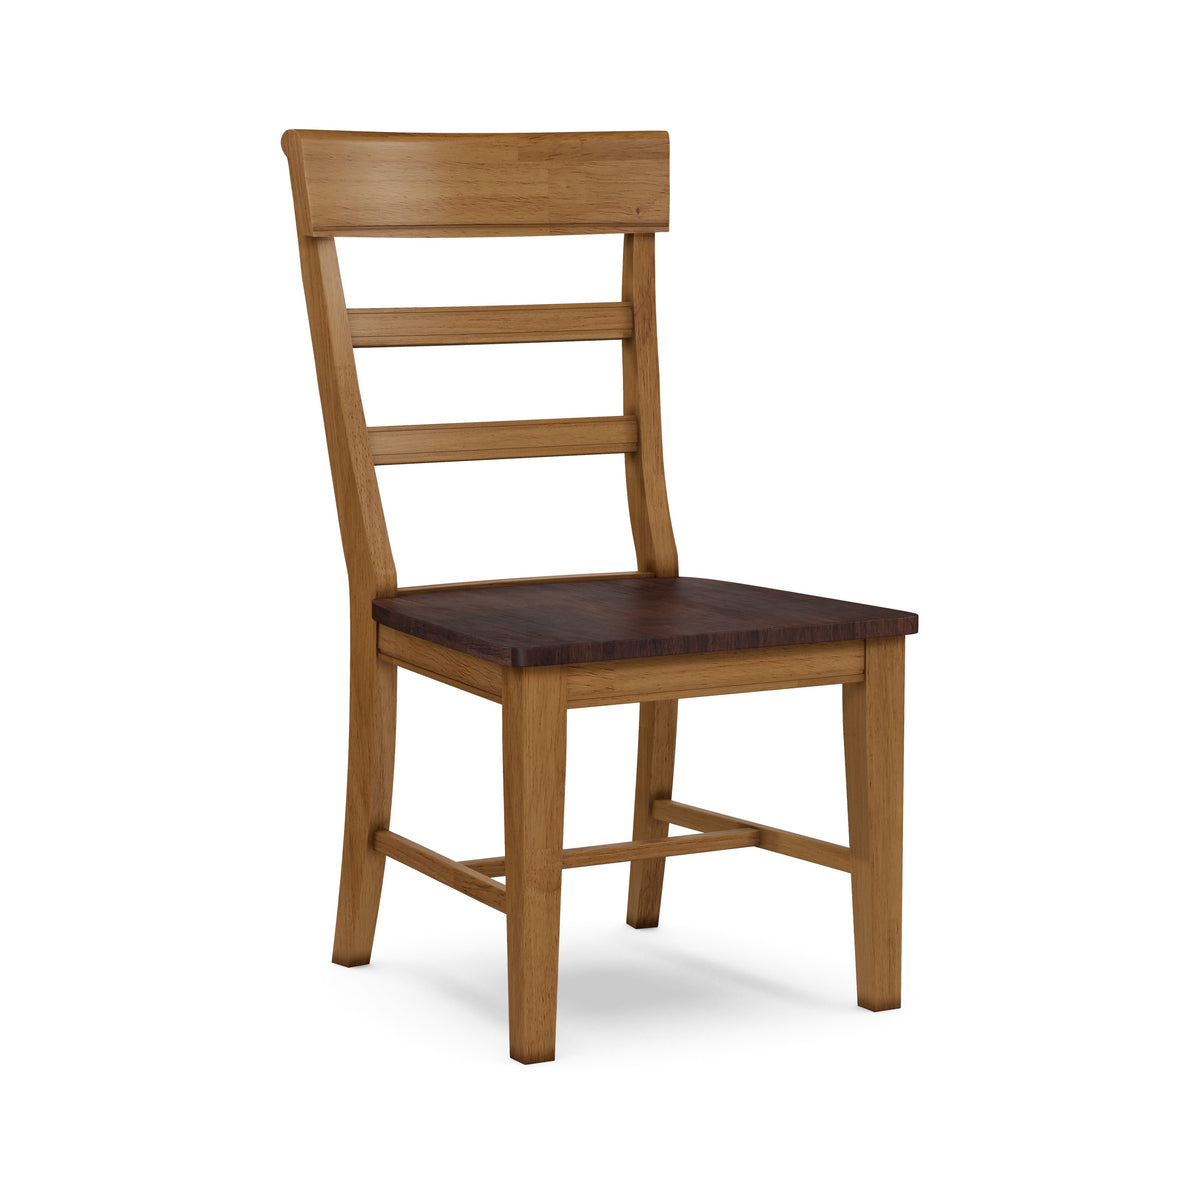 Hammerty Chair